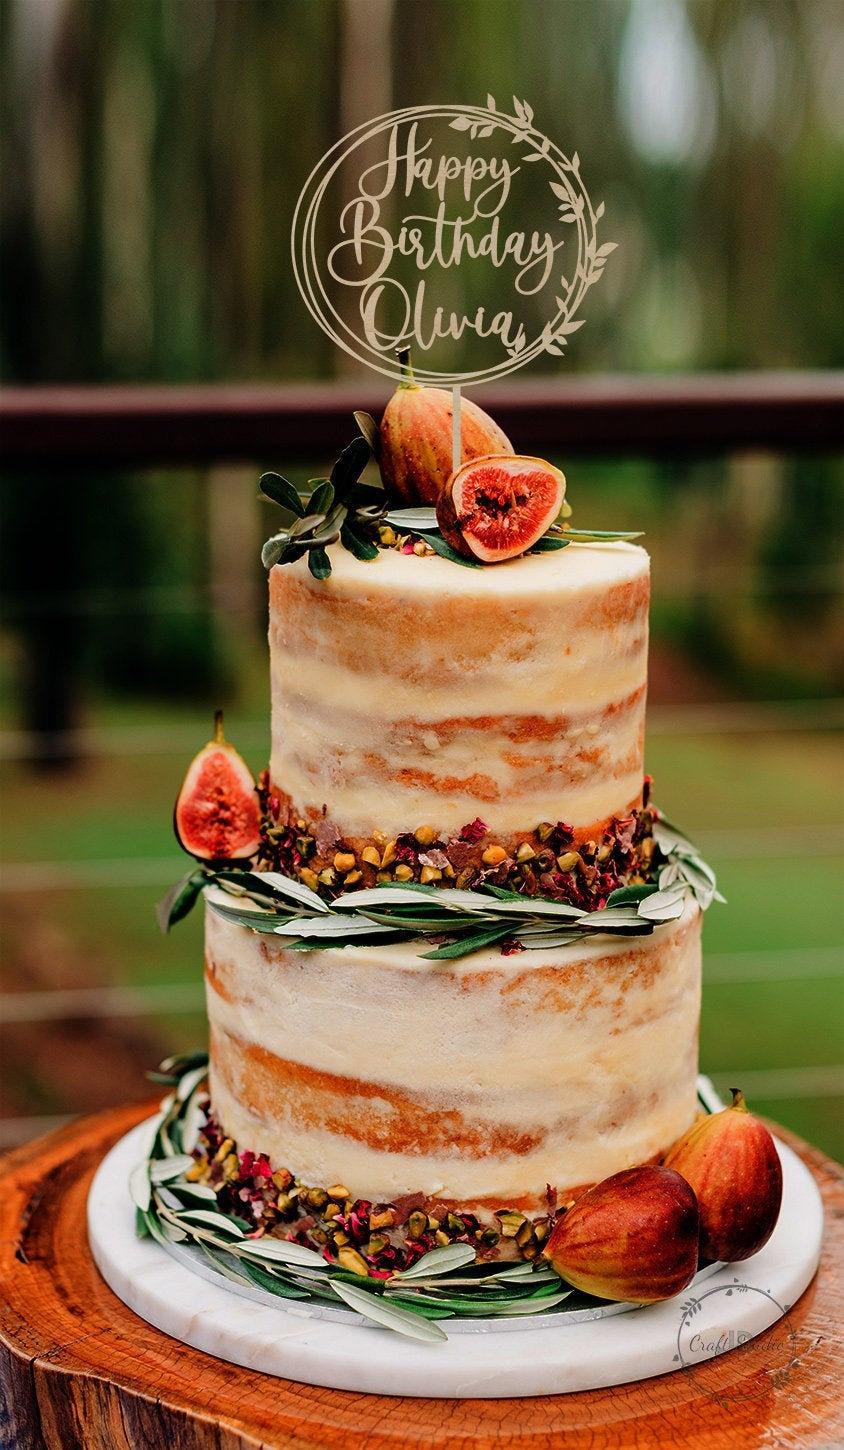 زفاف - Wedding Cake Topper, Birthday Cake Topper, Gold Cake Topper, Personalized Cake Topper - FREE FDA Direct Food Contact Approved Tape [203]